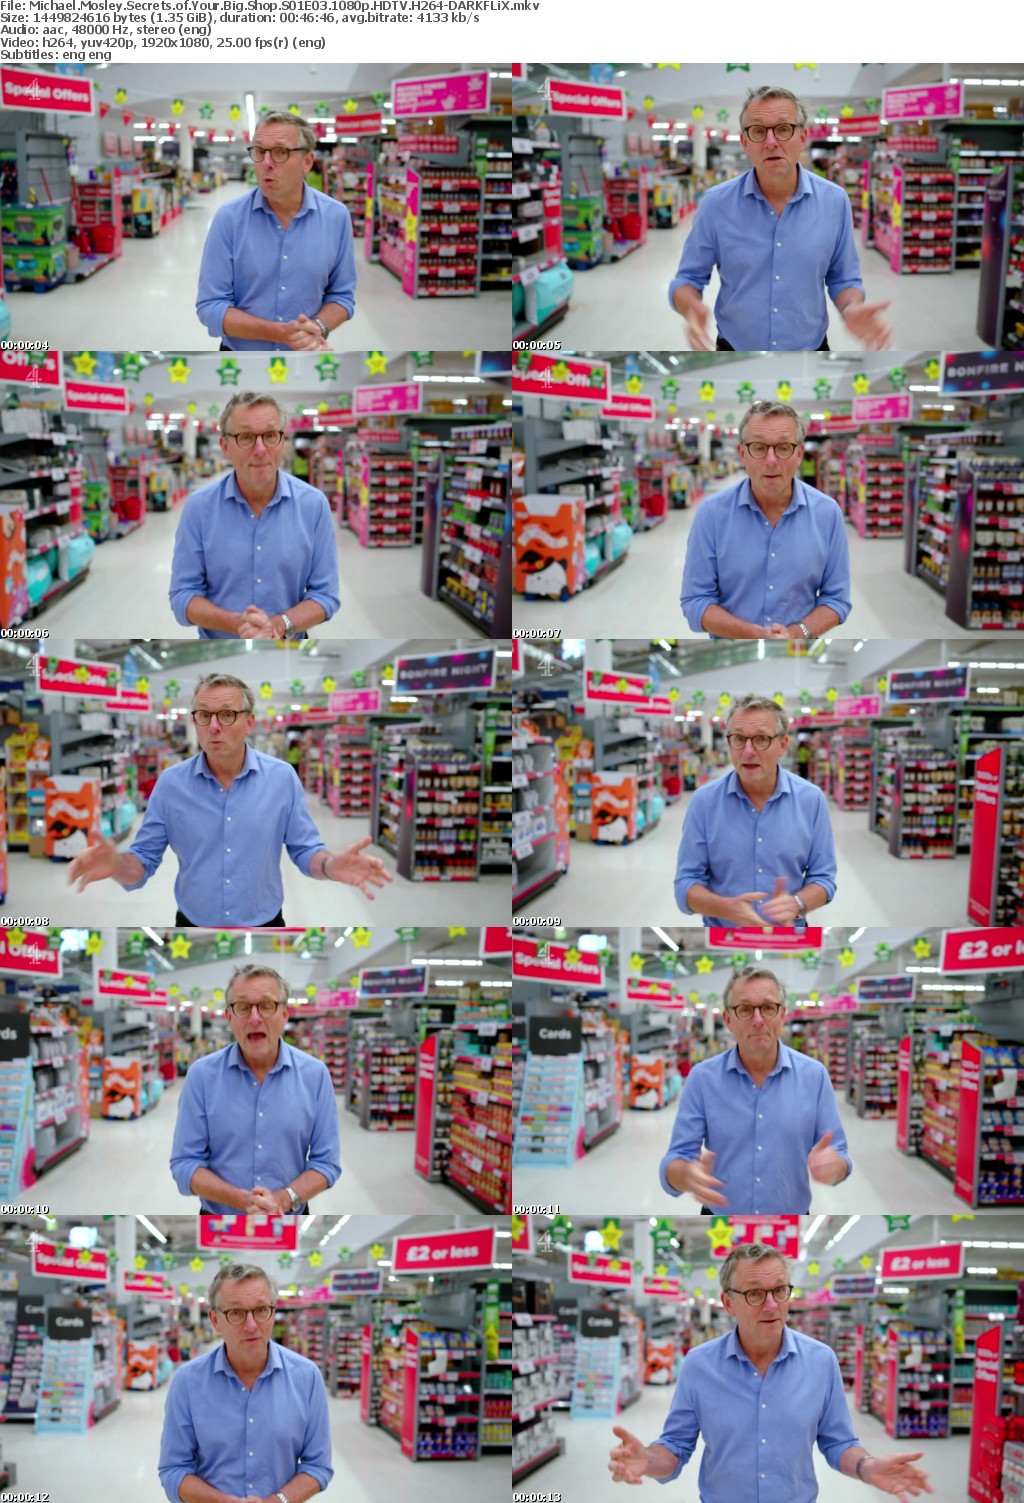 Michael Mosley Secrets of Your Big Shop S01E03 1080p HDTV H264-DARKFLiX